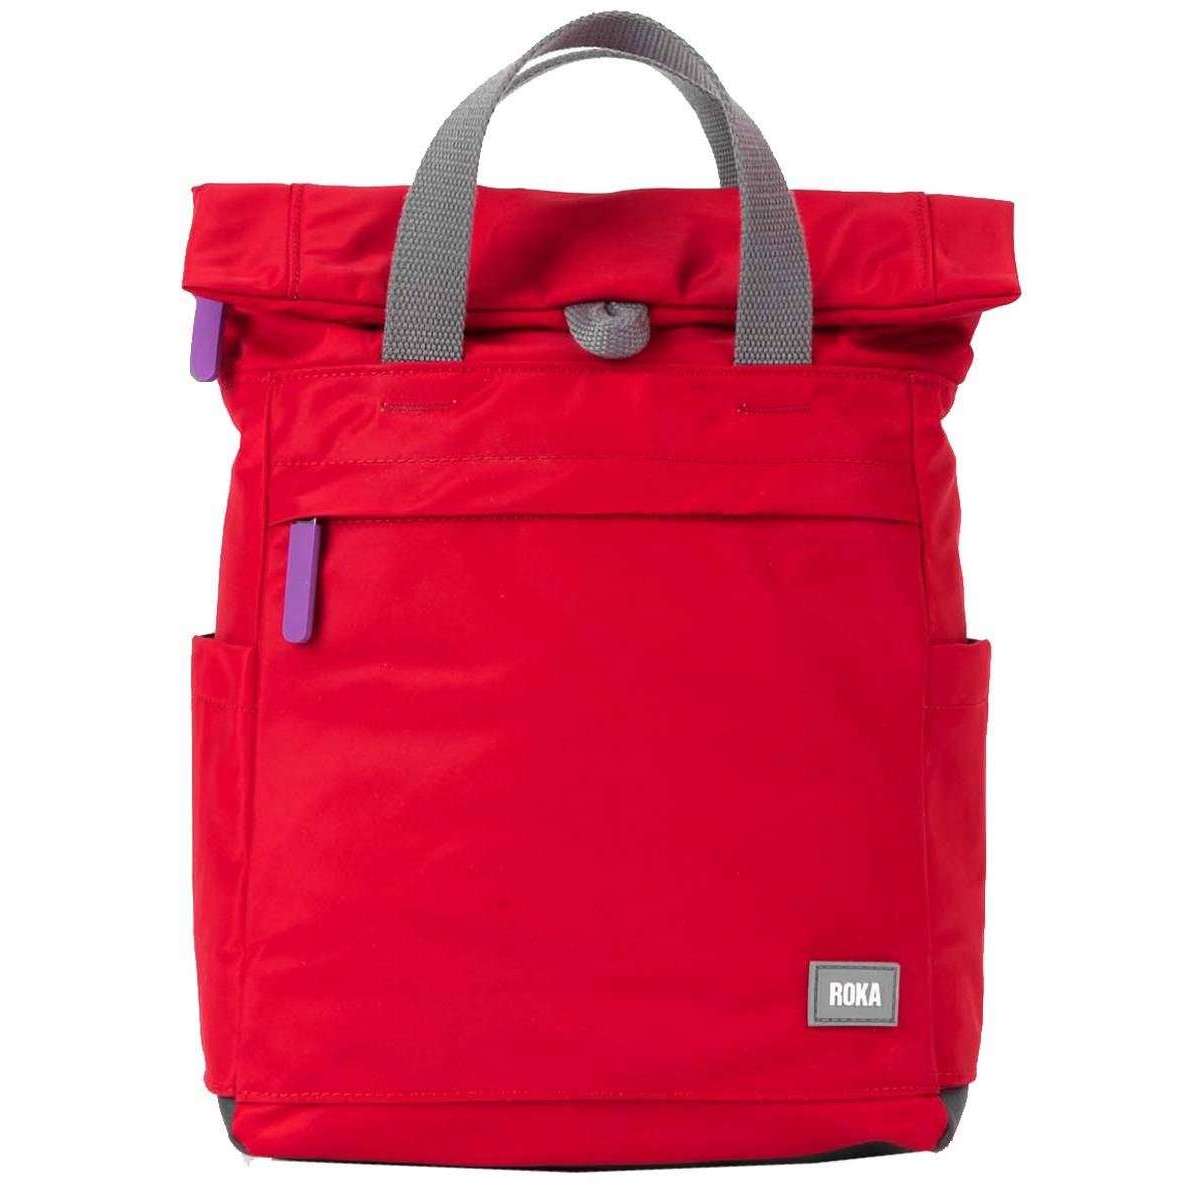 Roka Camden A Small Sustainable Nylon Backpack - Negroni Red